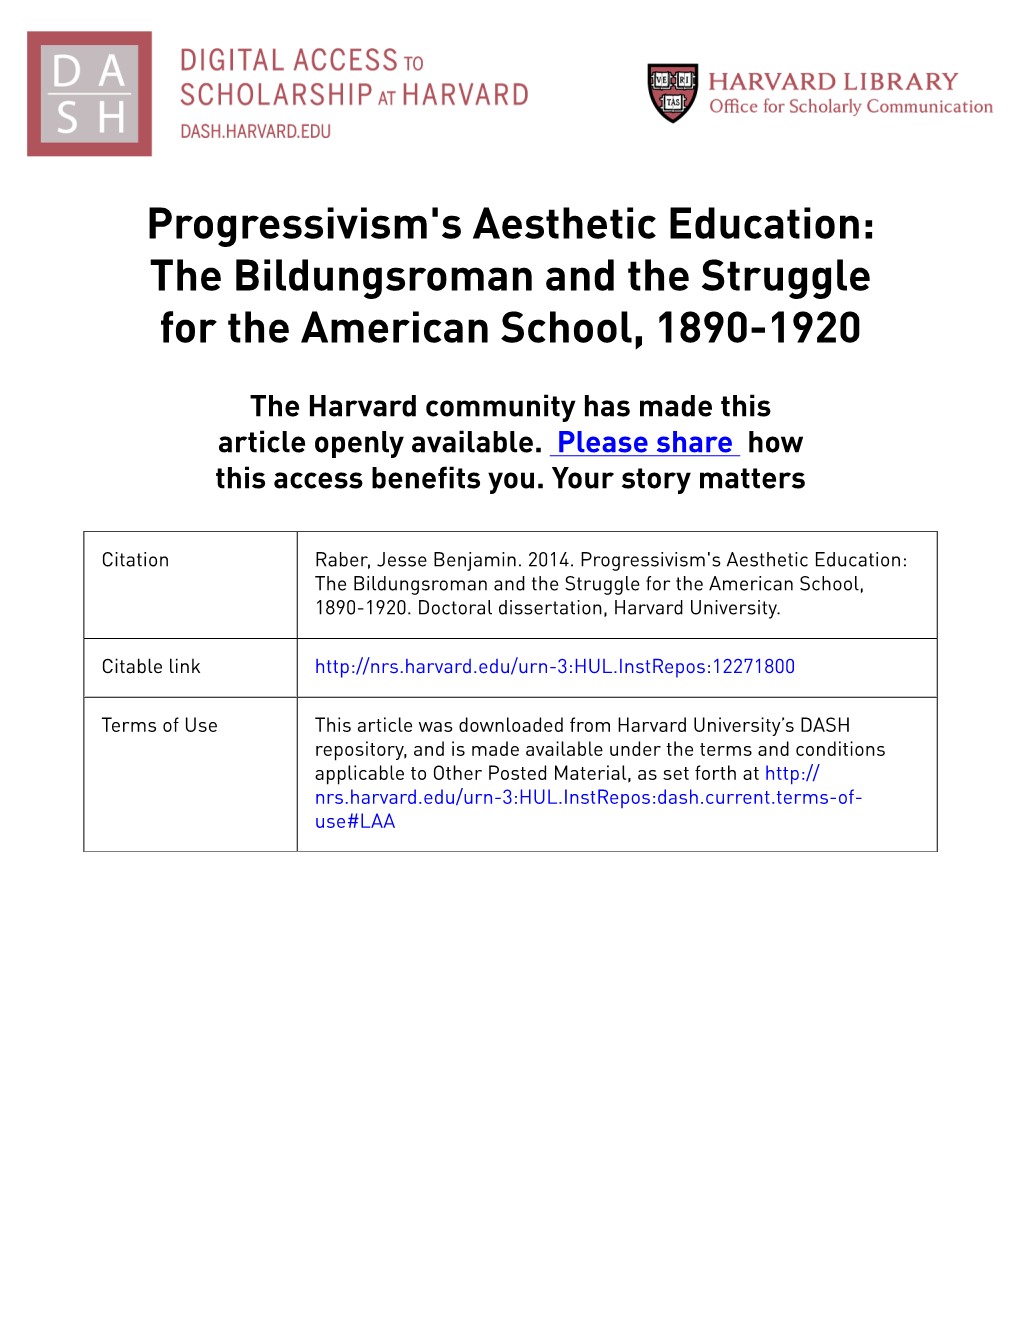 Progressivism's Aesthetic Education: the Bildungsroman and the Struggle for the American School, 1890-1920